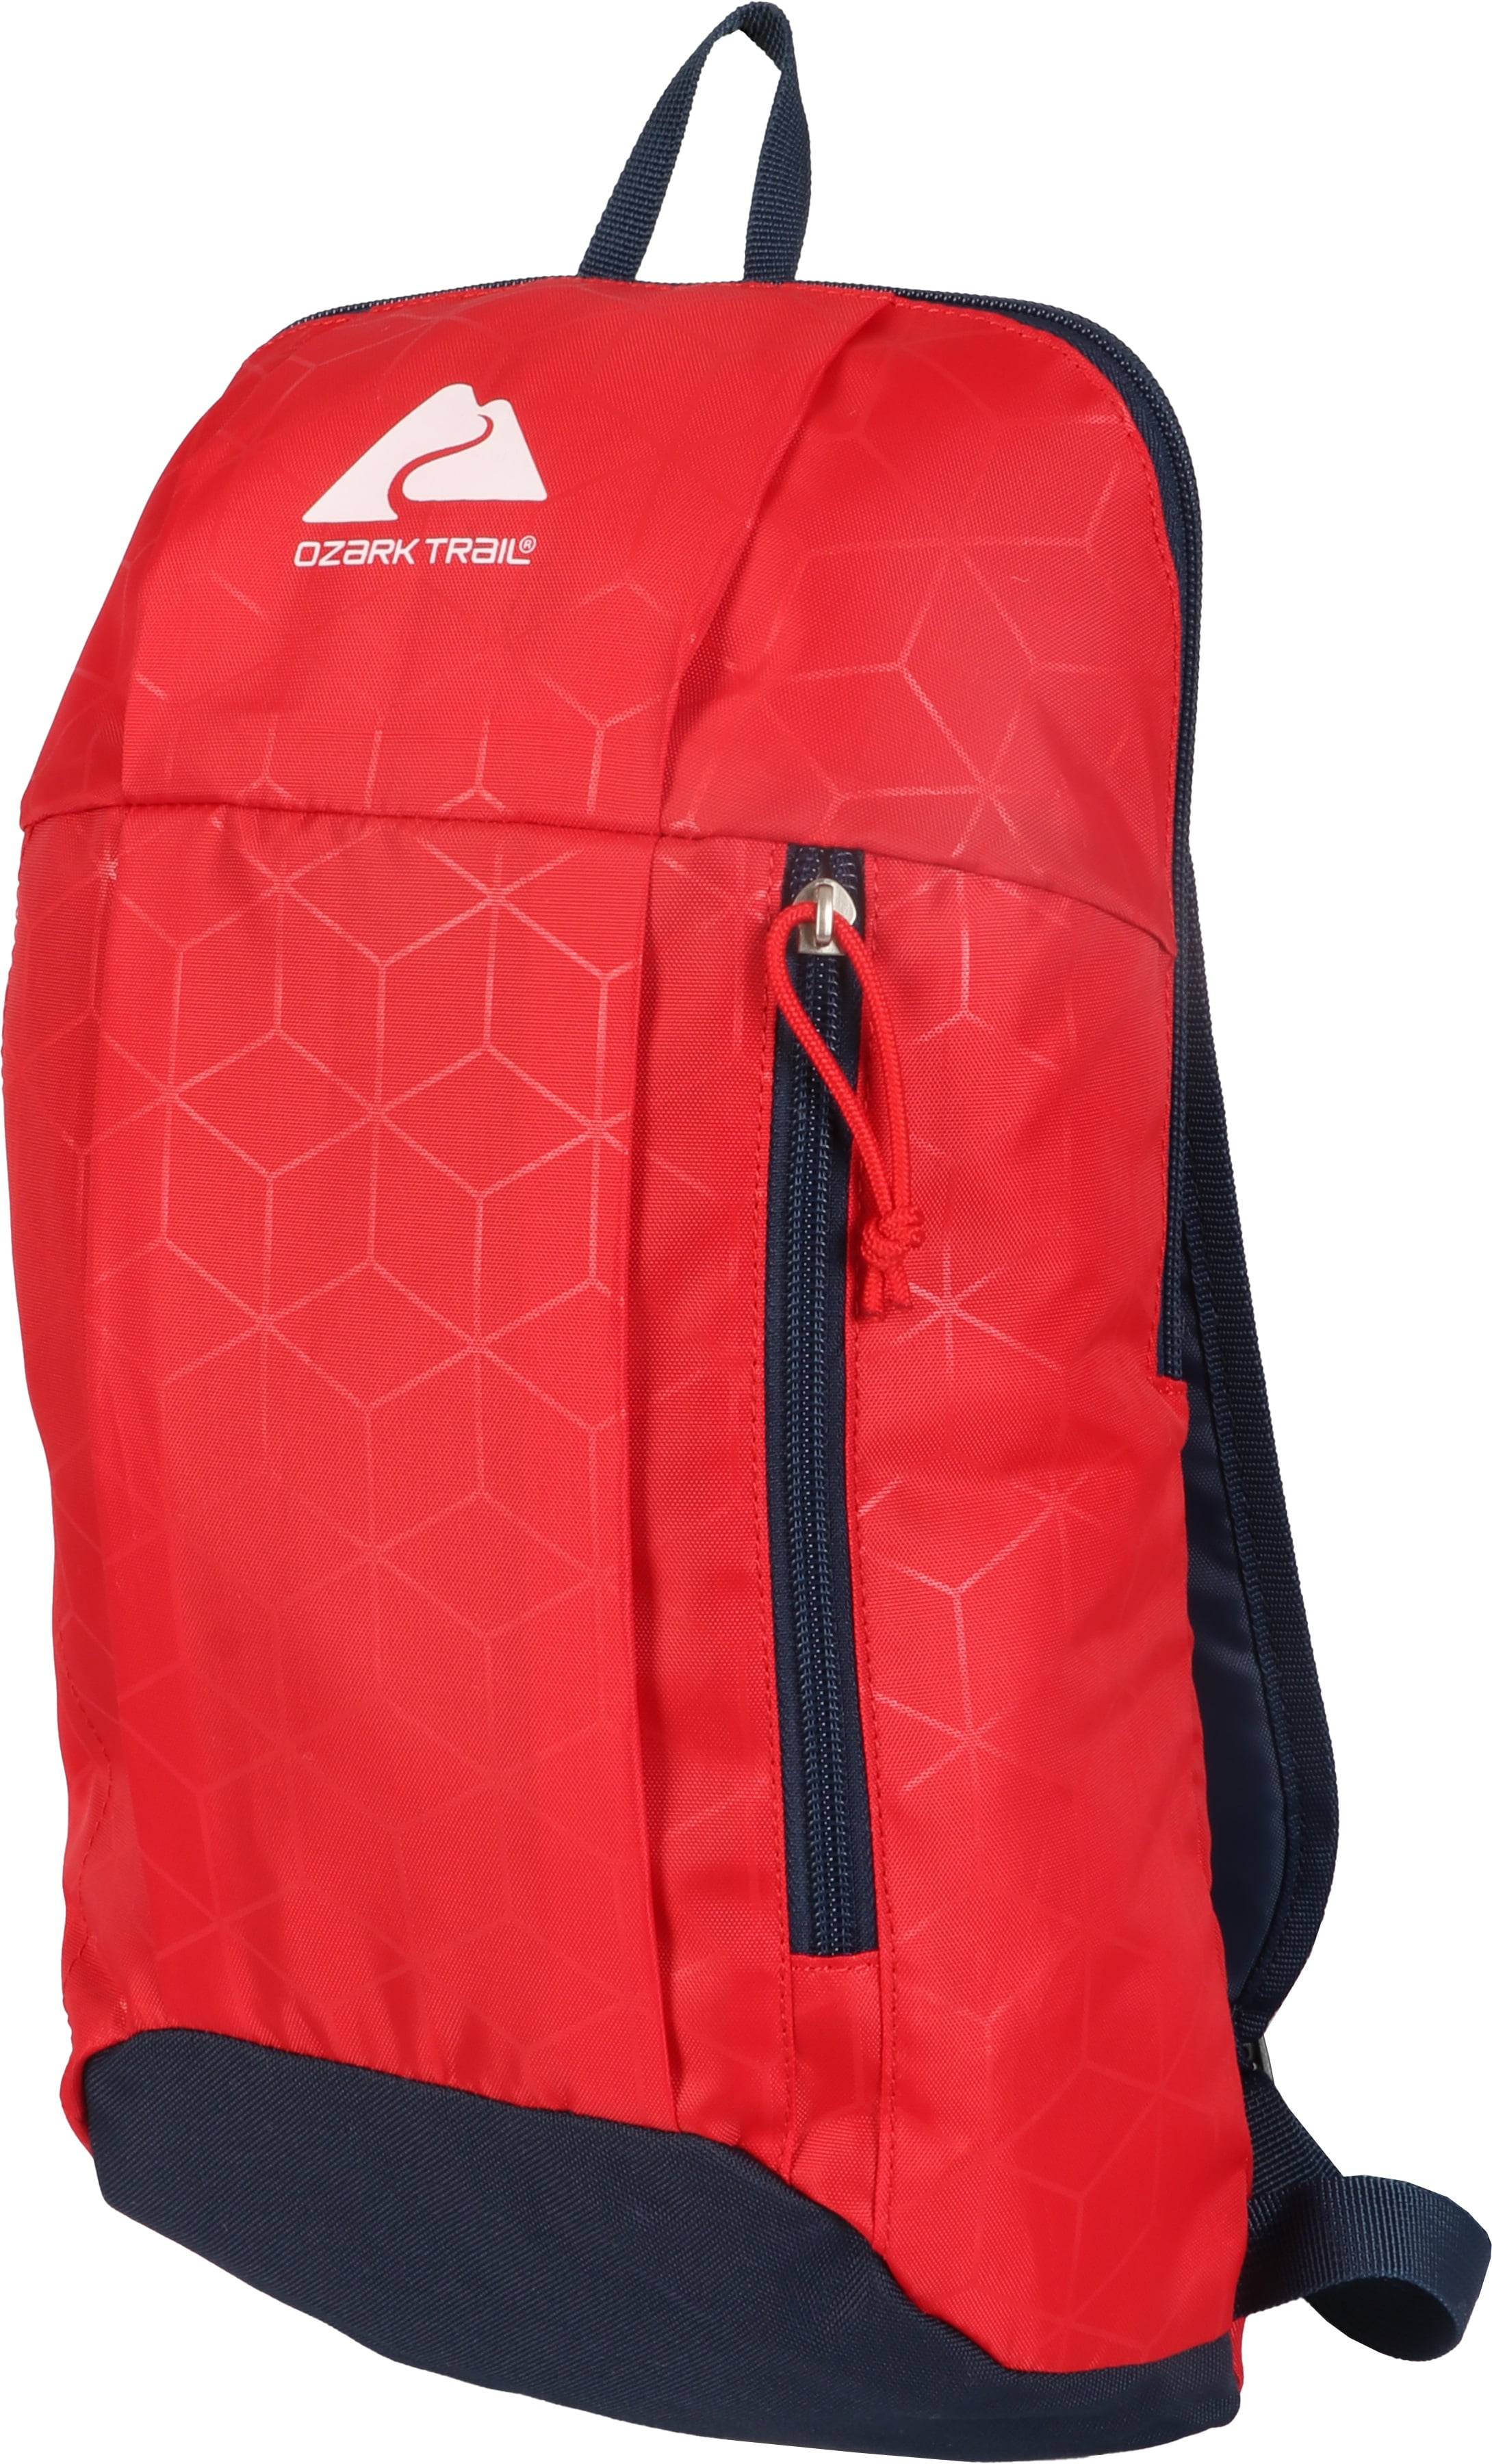 Ozark Trail Adult 10 Liter Backpacking Daypack, Unisex, Red